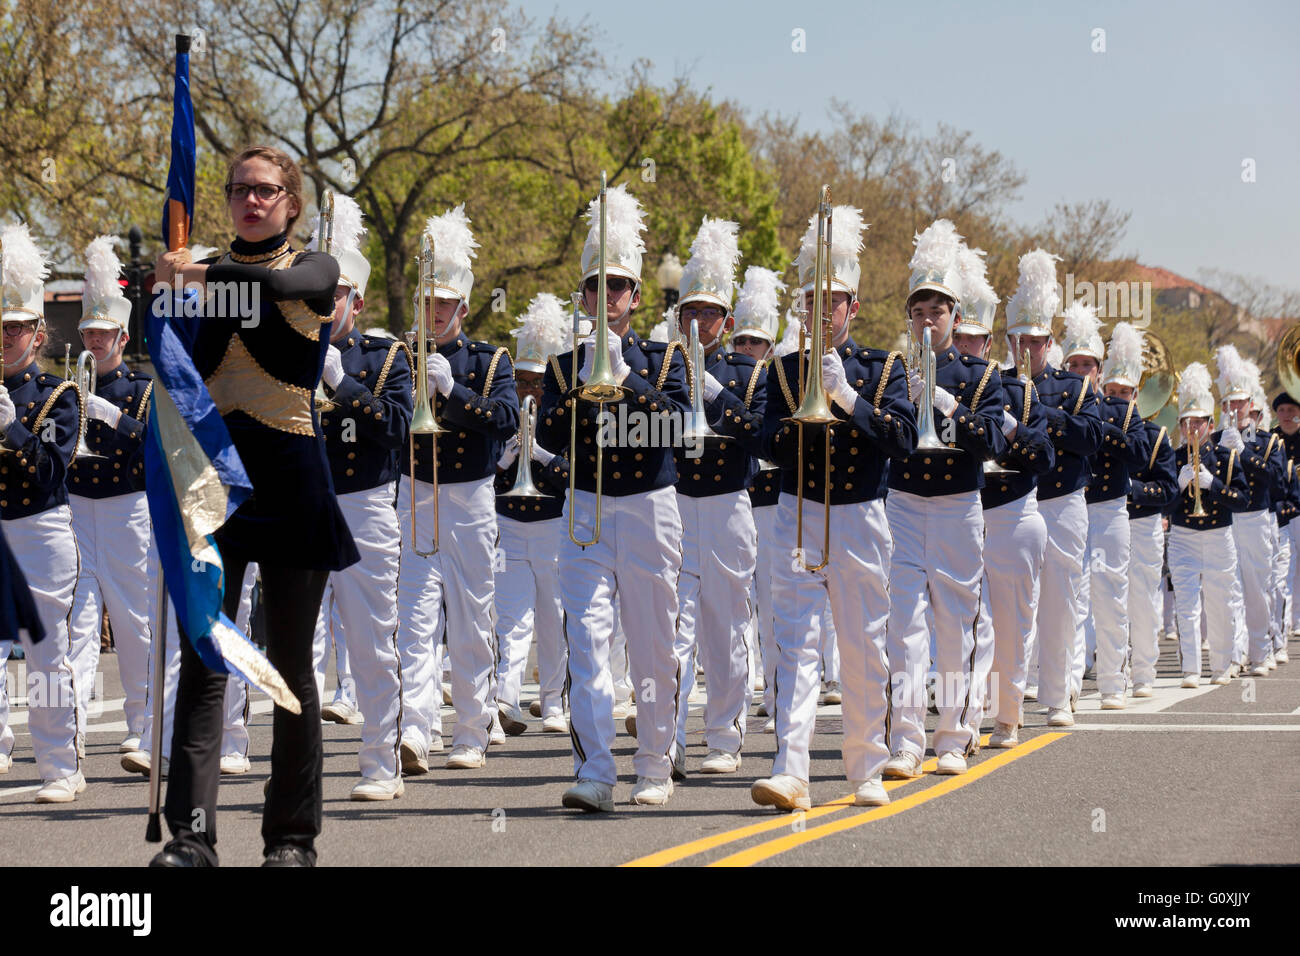 High school marching band trombone players at 2016 National Cherry Blossom Festival parade - Washington, DC USA Stock Photo